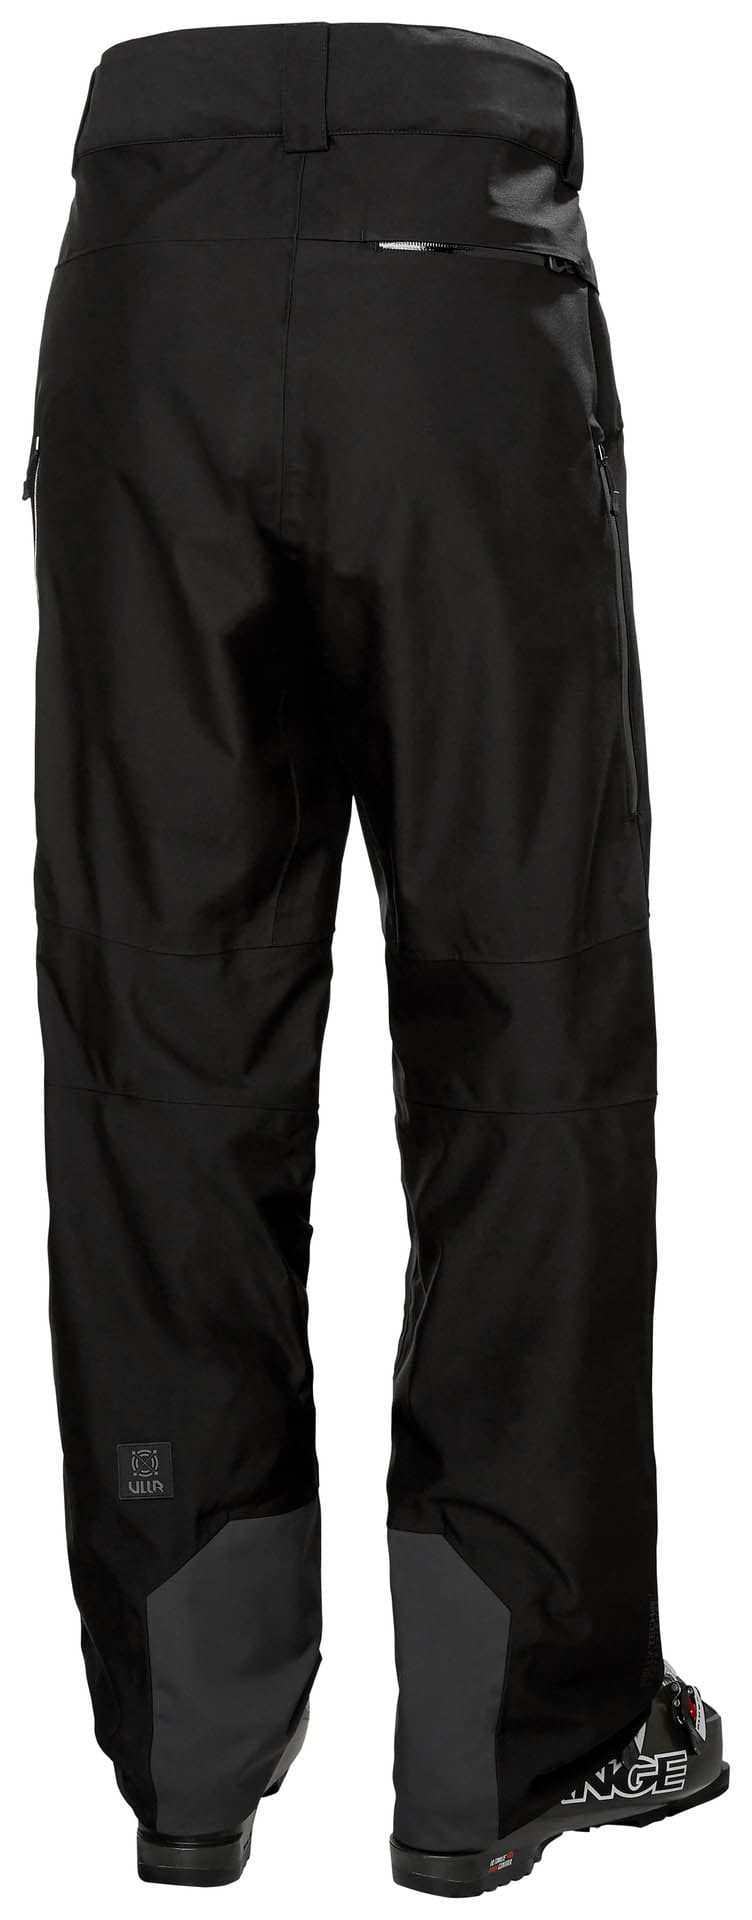 Helly Hansen CLOTHING - Men - Outerwear - Pant Helly Hansen *23W* Mens Garibaldi 2.0 Pant